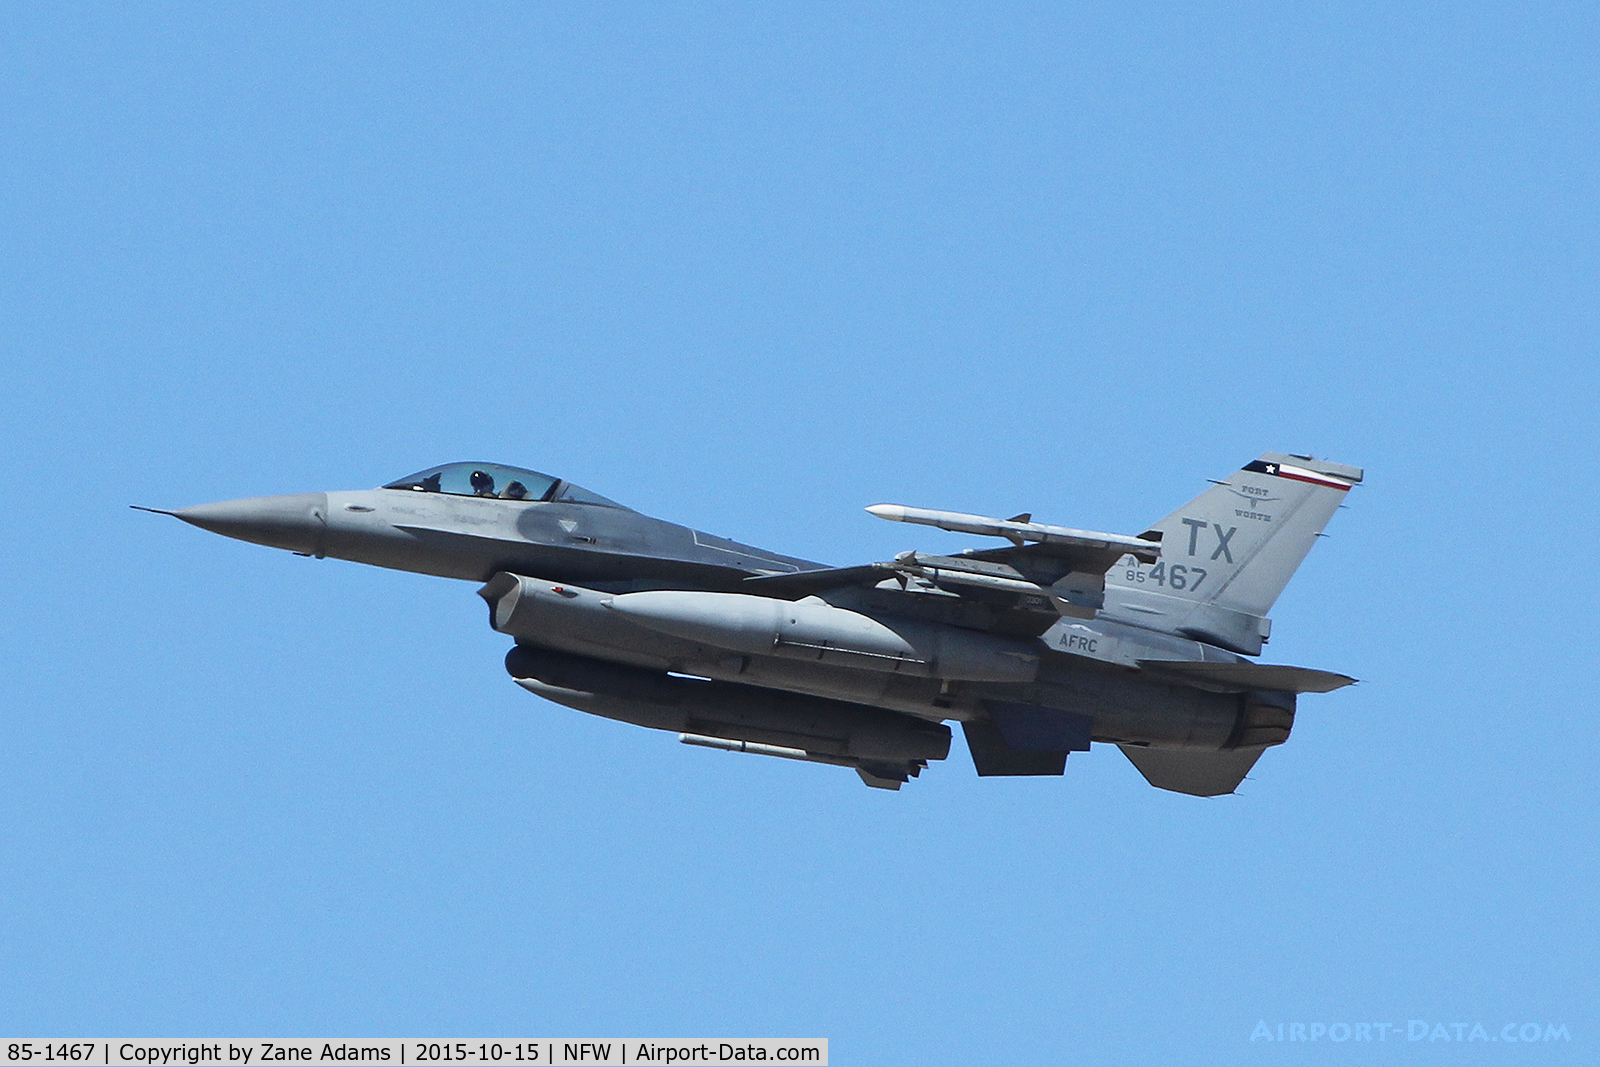 85-1467, 1986 General Dynamics F-16C Fighting Falcon C/N 5C-247, 301st FW F-16 departing NAS Fort Worth